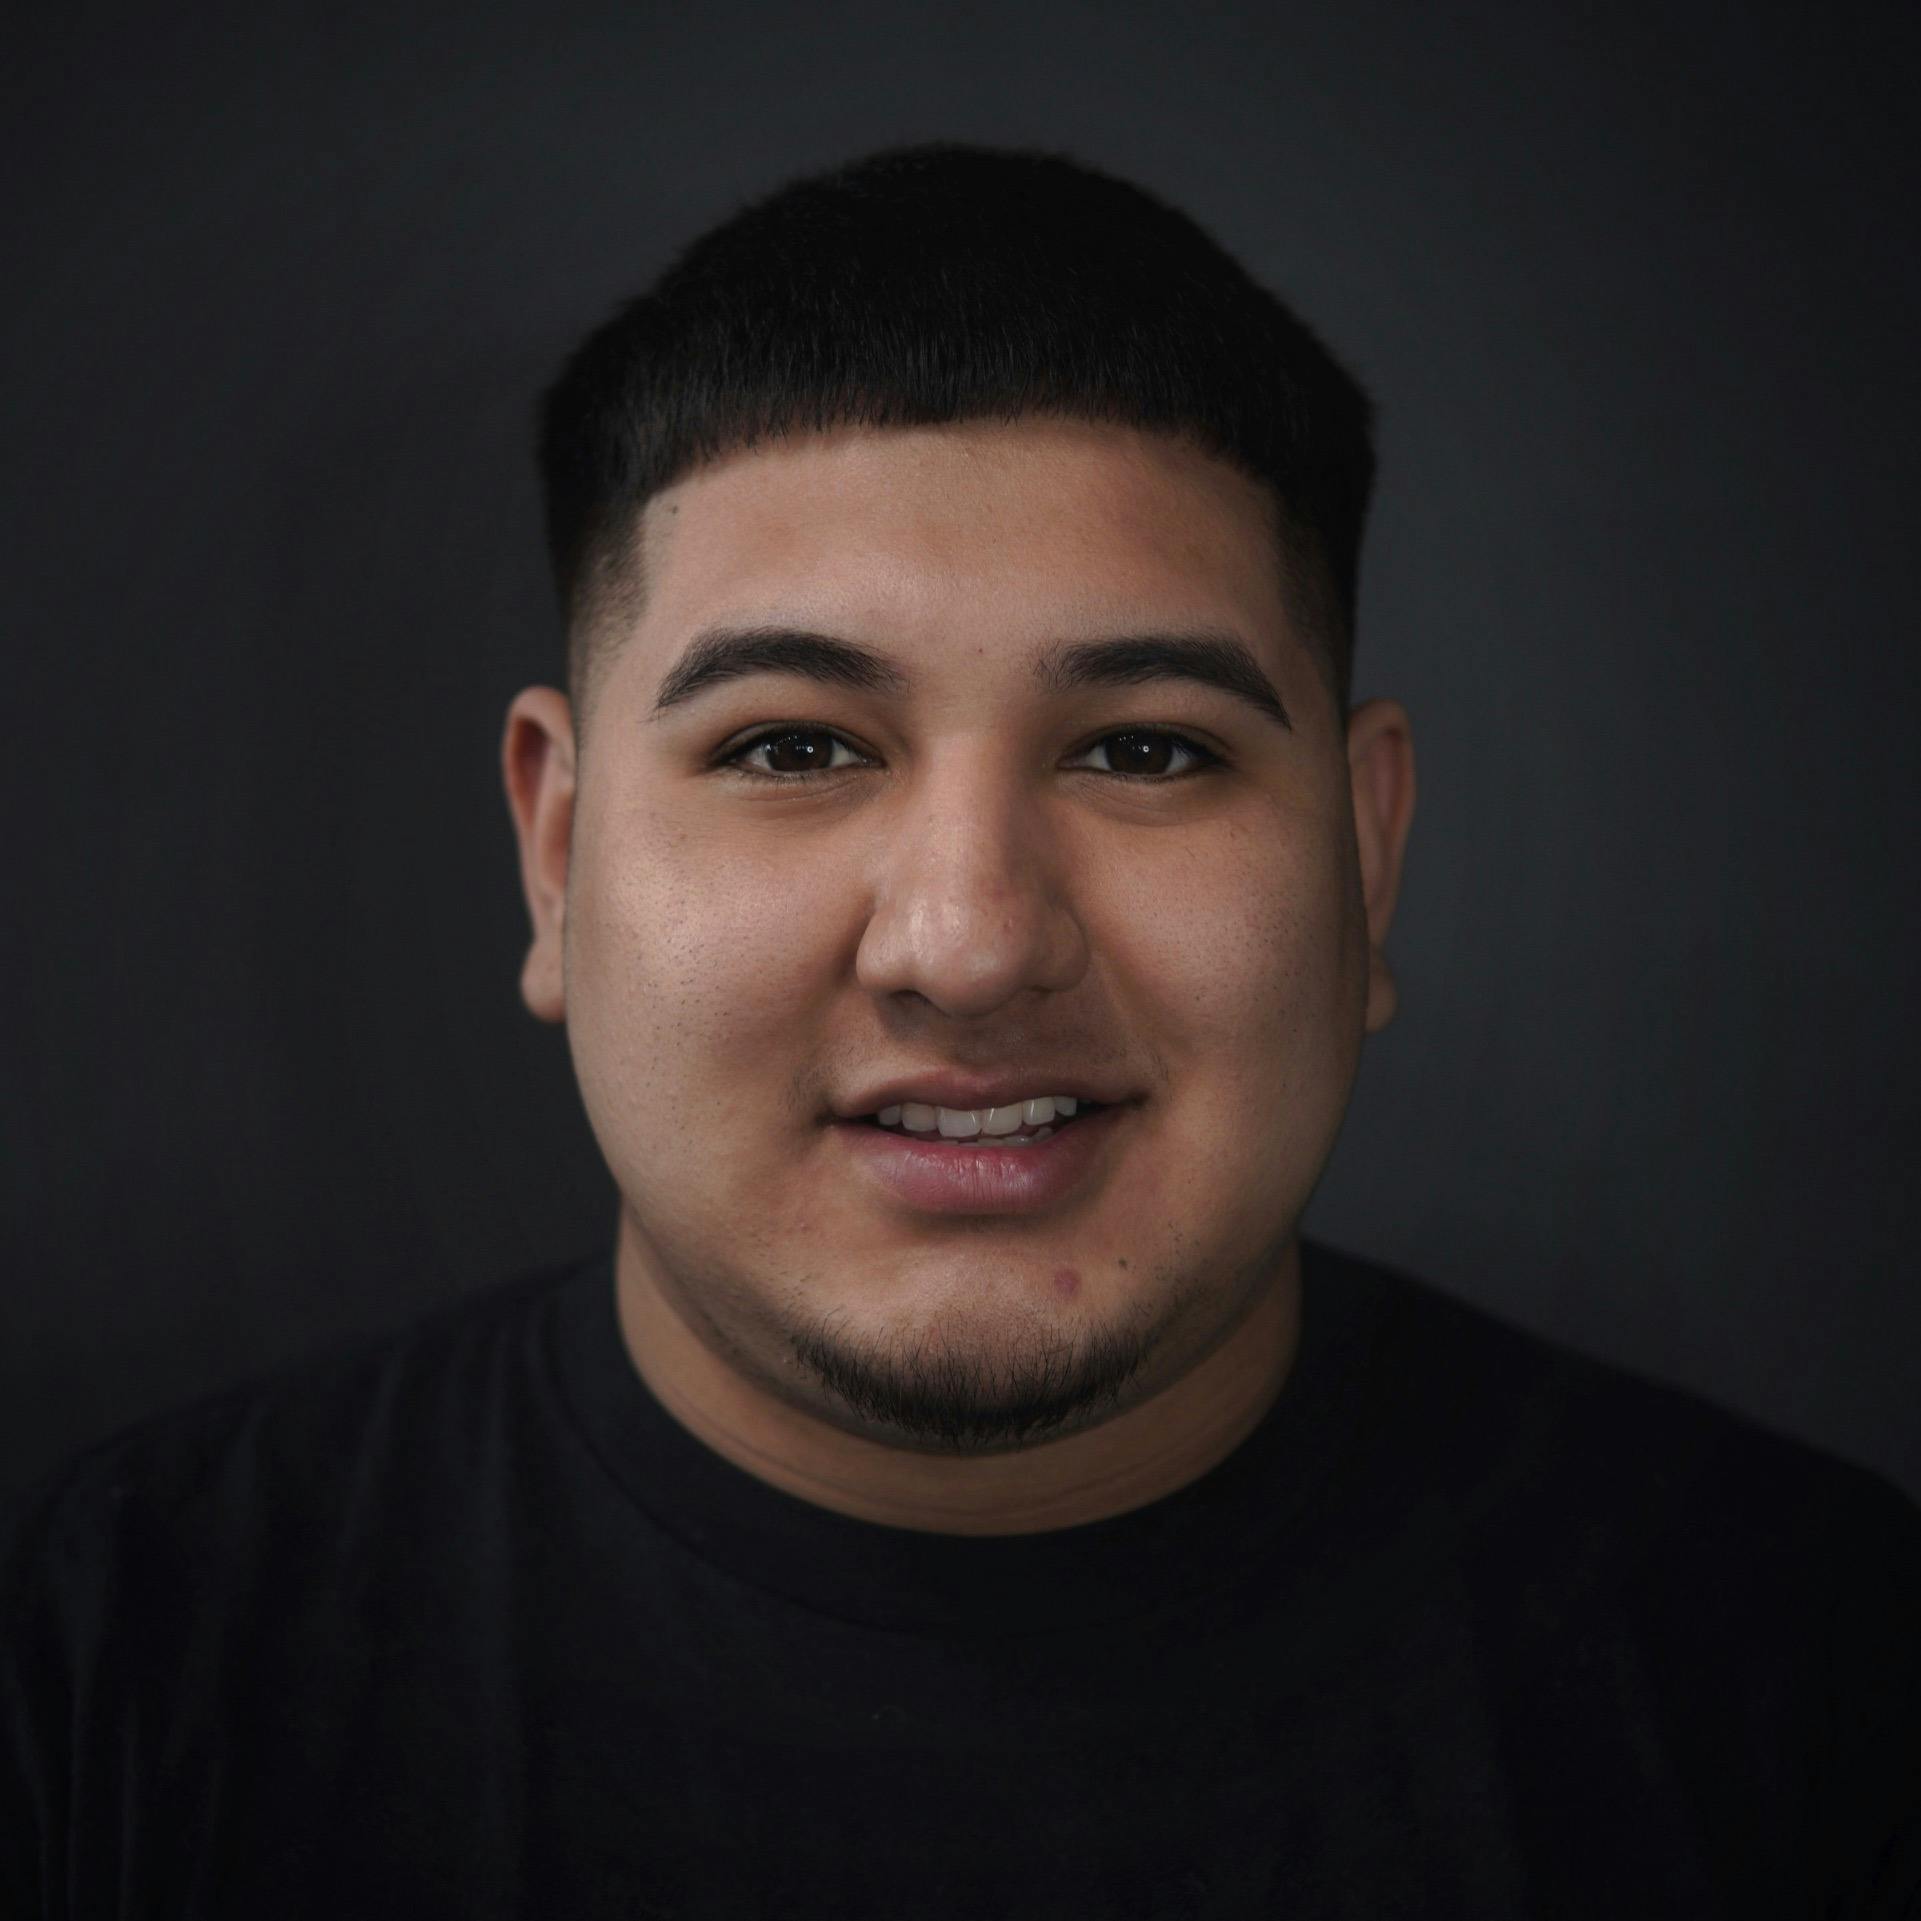 Republic barber image of Joshua Gerardo